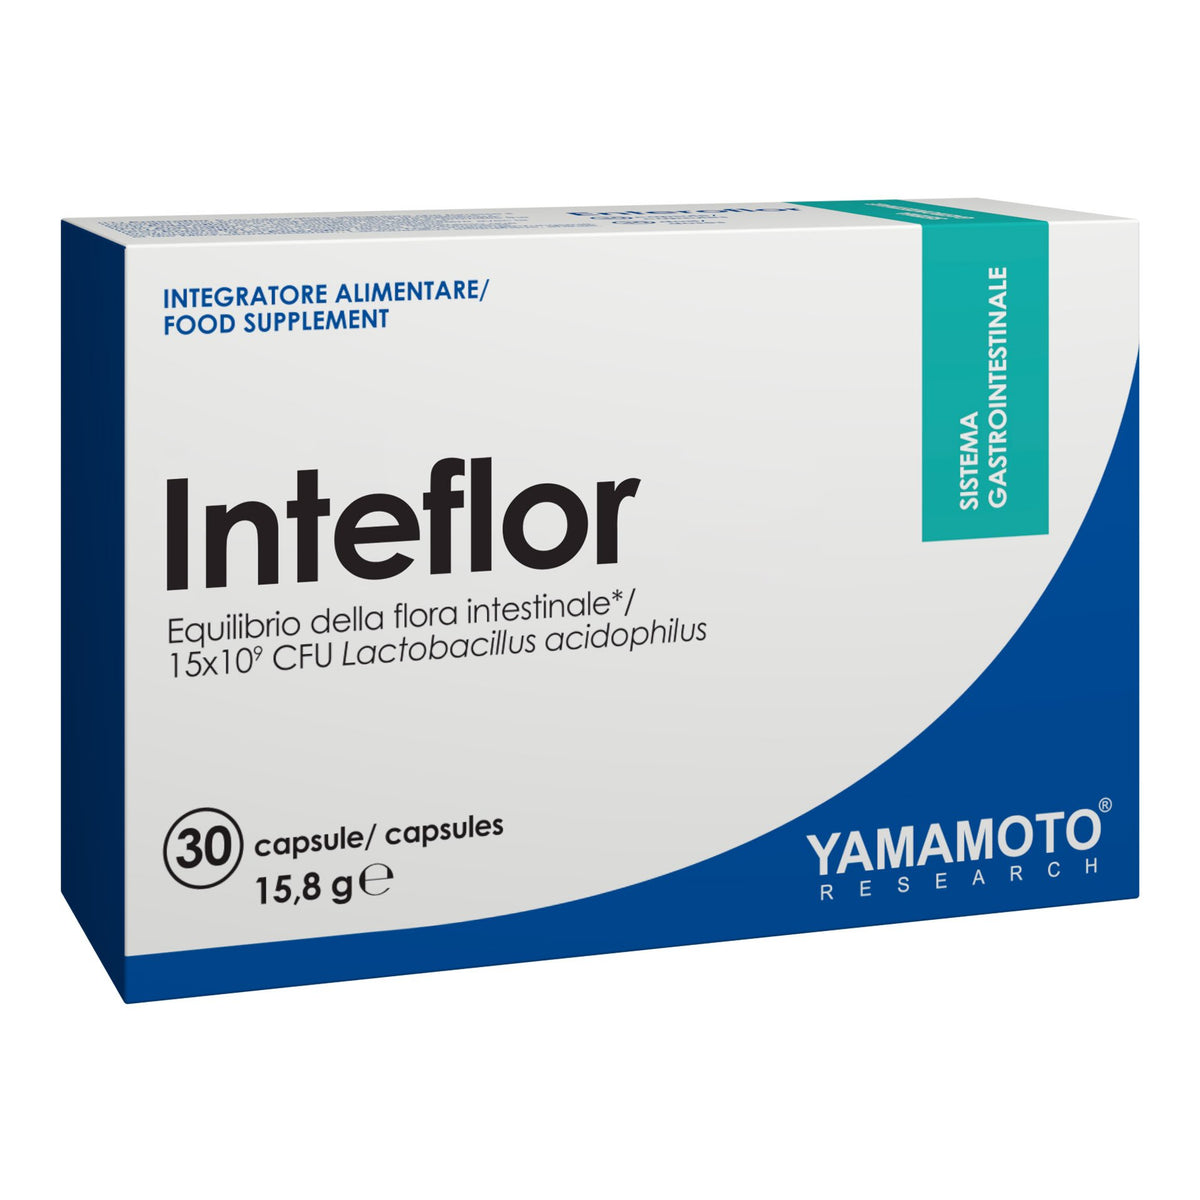 Inteflor - 30 cps - YAMAMOTO RESEARCH - Parafarmacia PHARMAGOLI